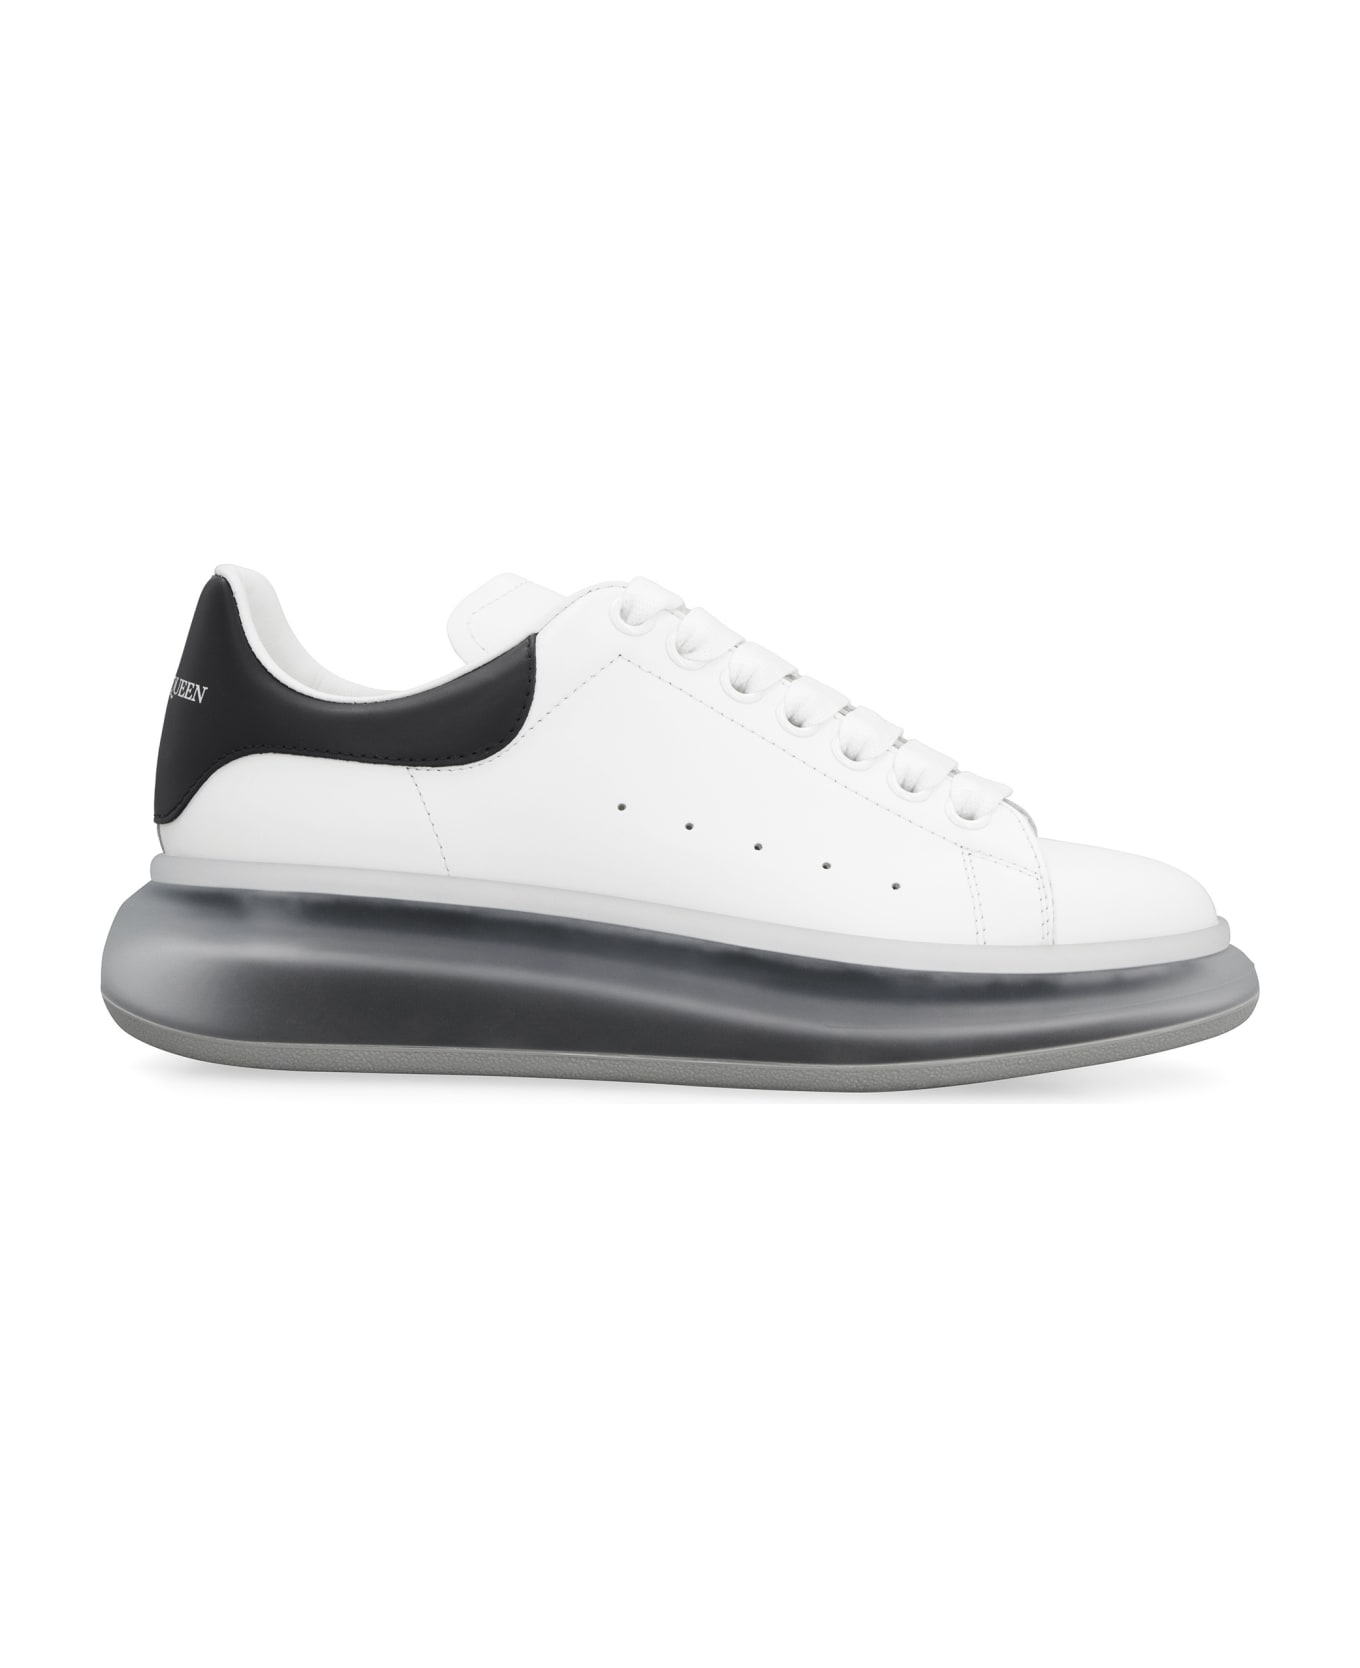 Alexander McQueen Larry Leather Sneakers - White Navy Navy